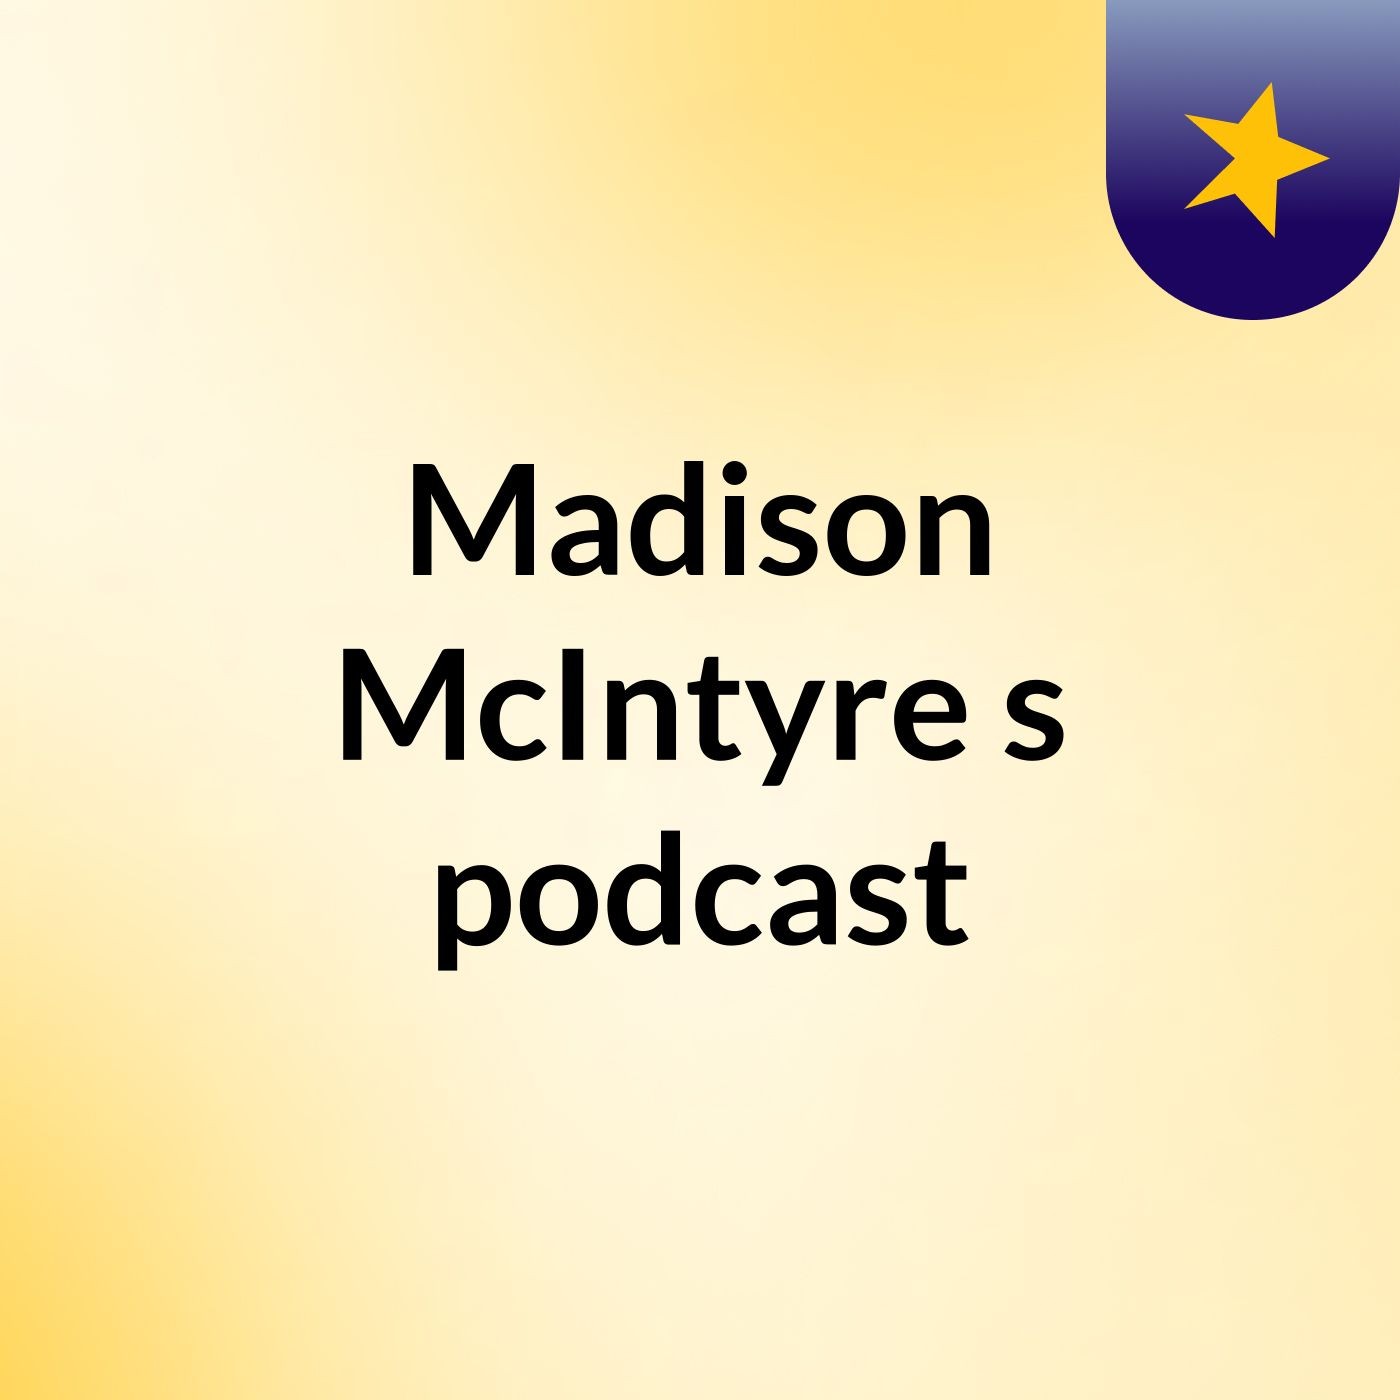 Madison McIntyre's podcast